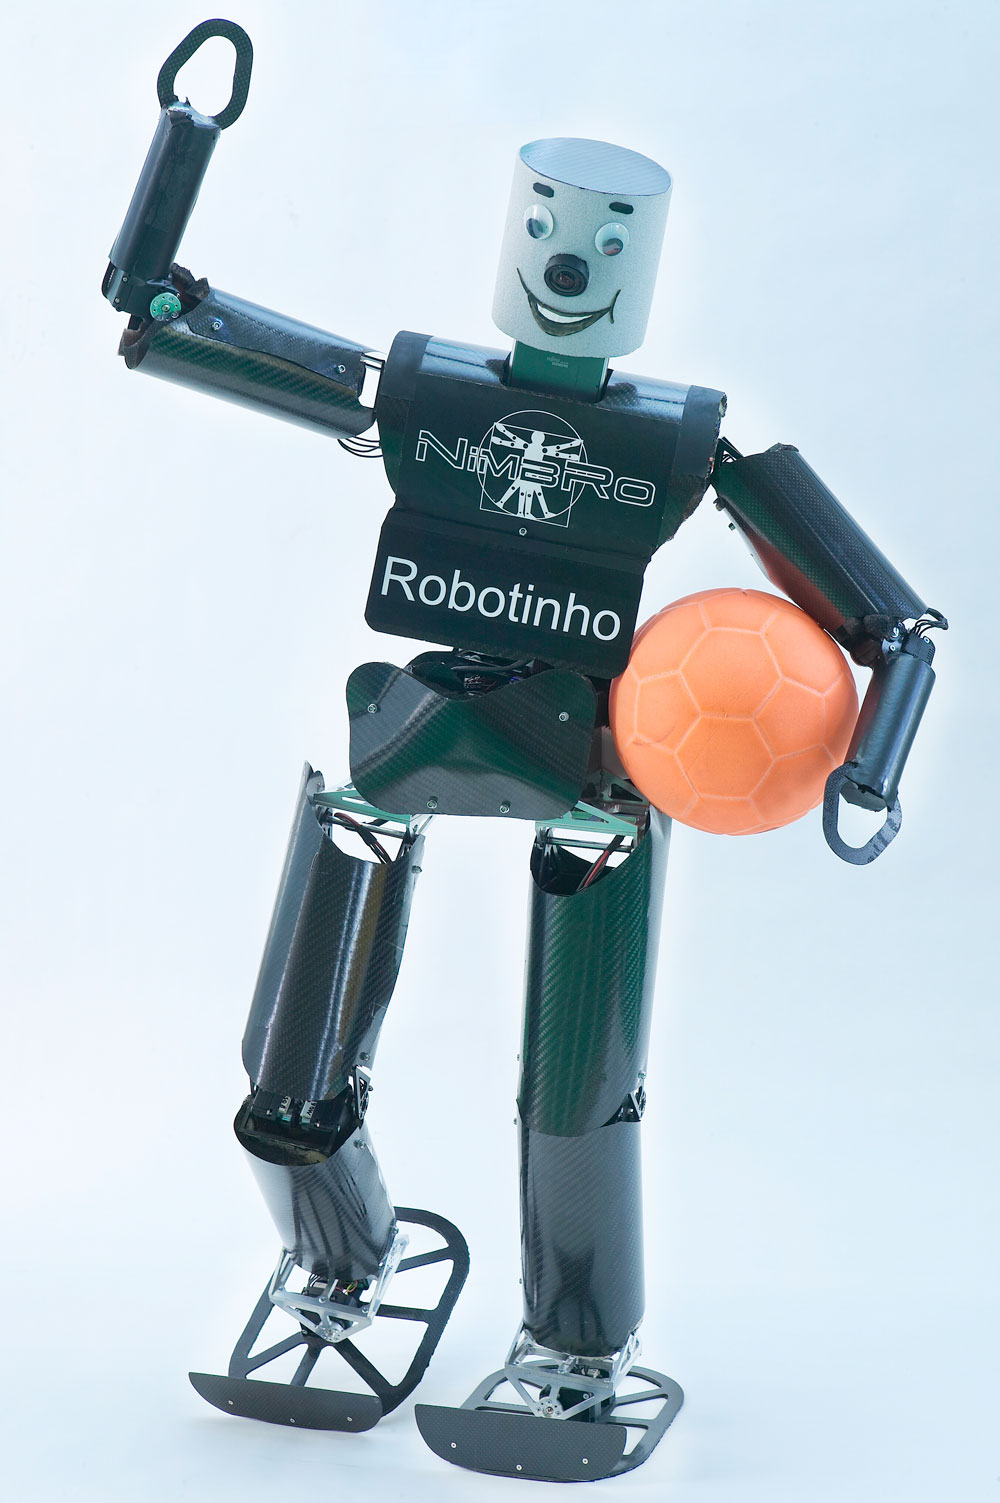 Robotinho - Picture: /uploads/images/robots/robotpictures-all/robotinho-001.jpg